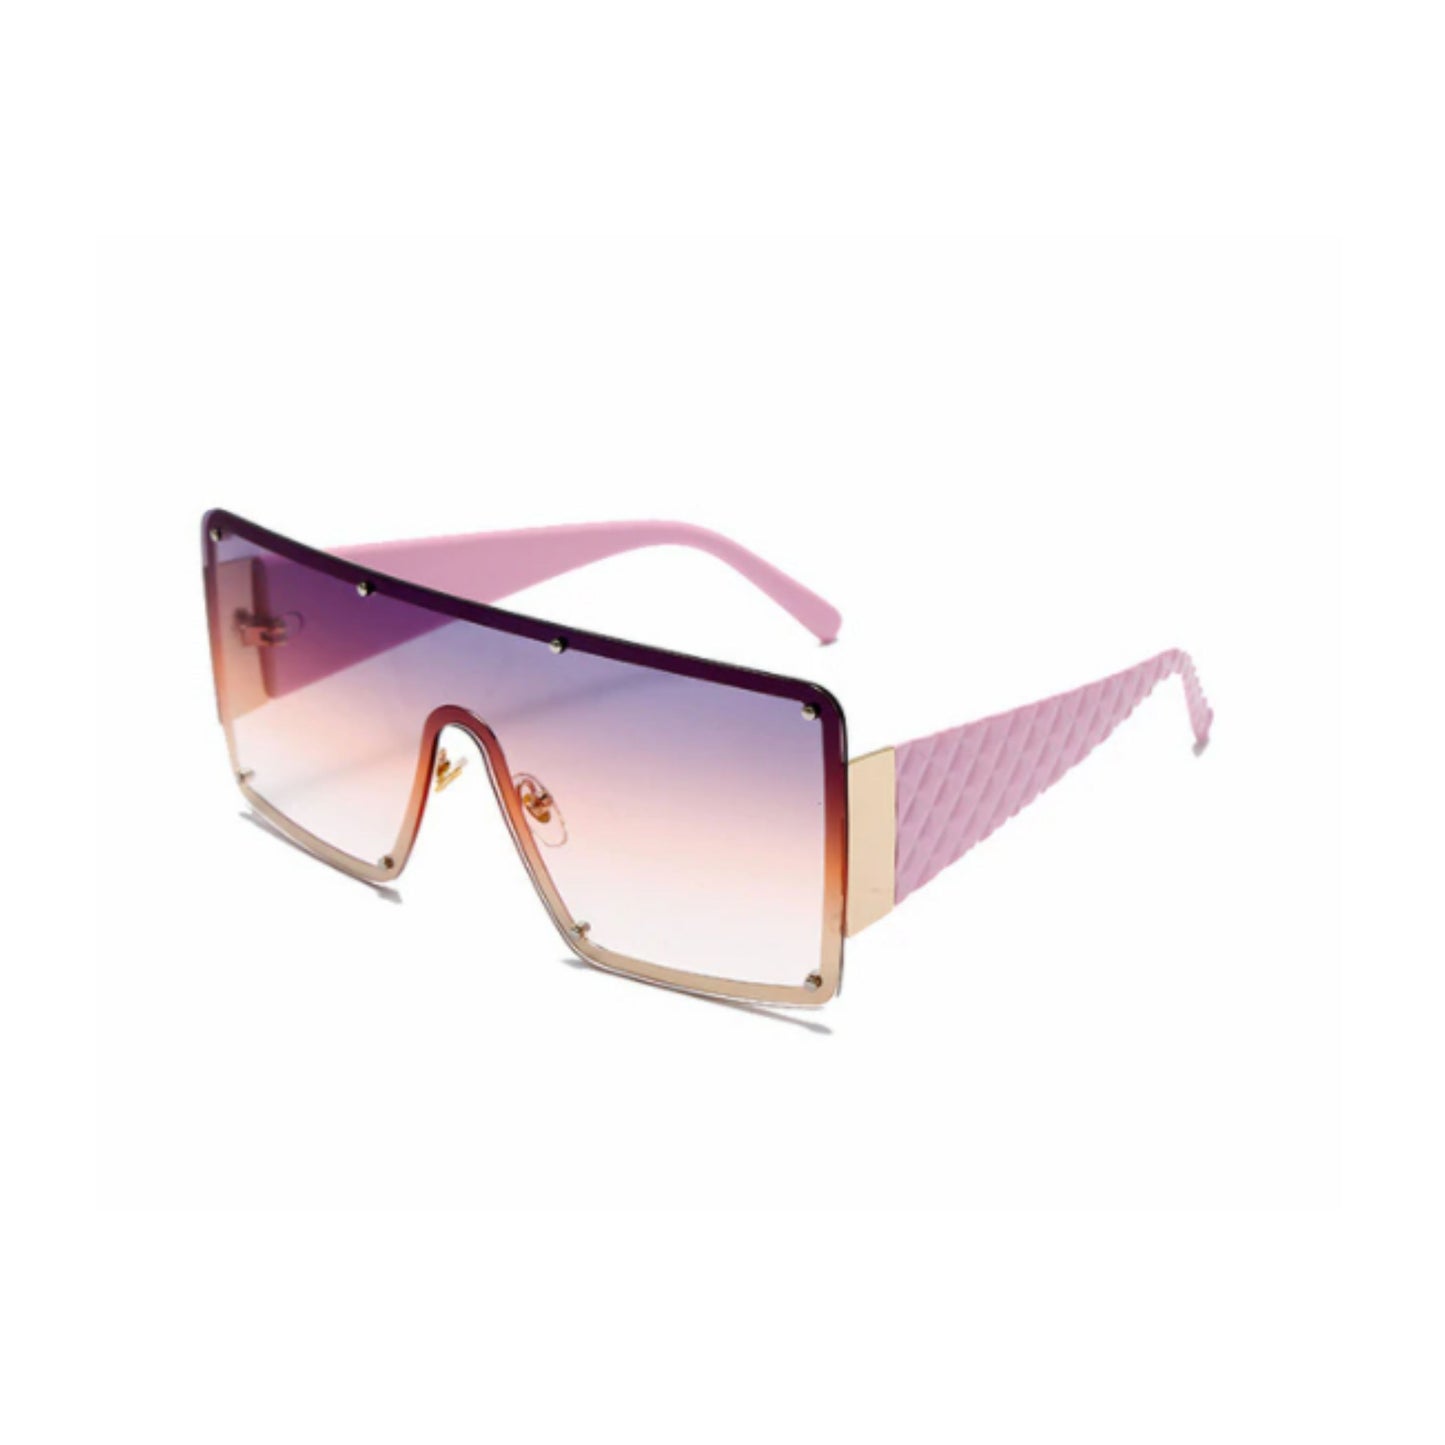 Pink High Fashion Sunglasses